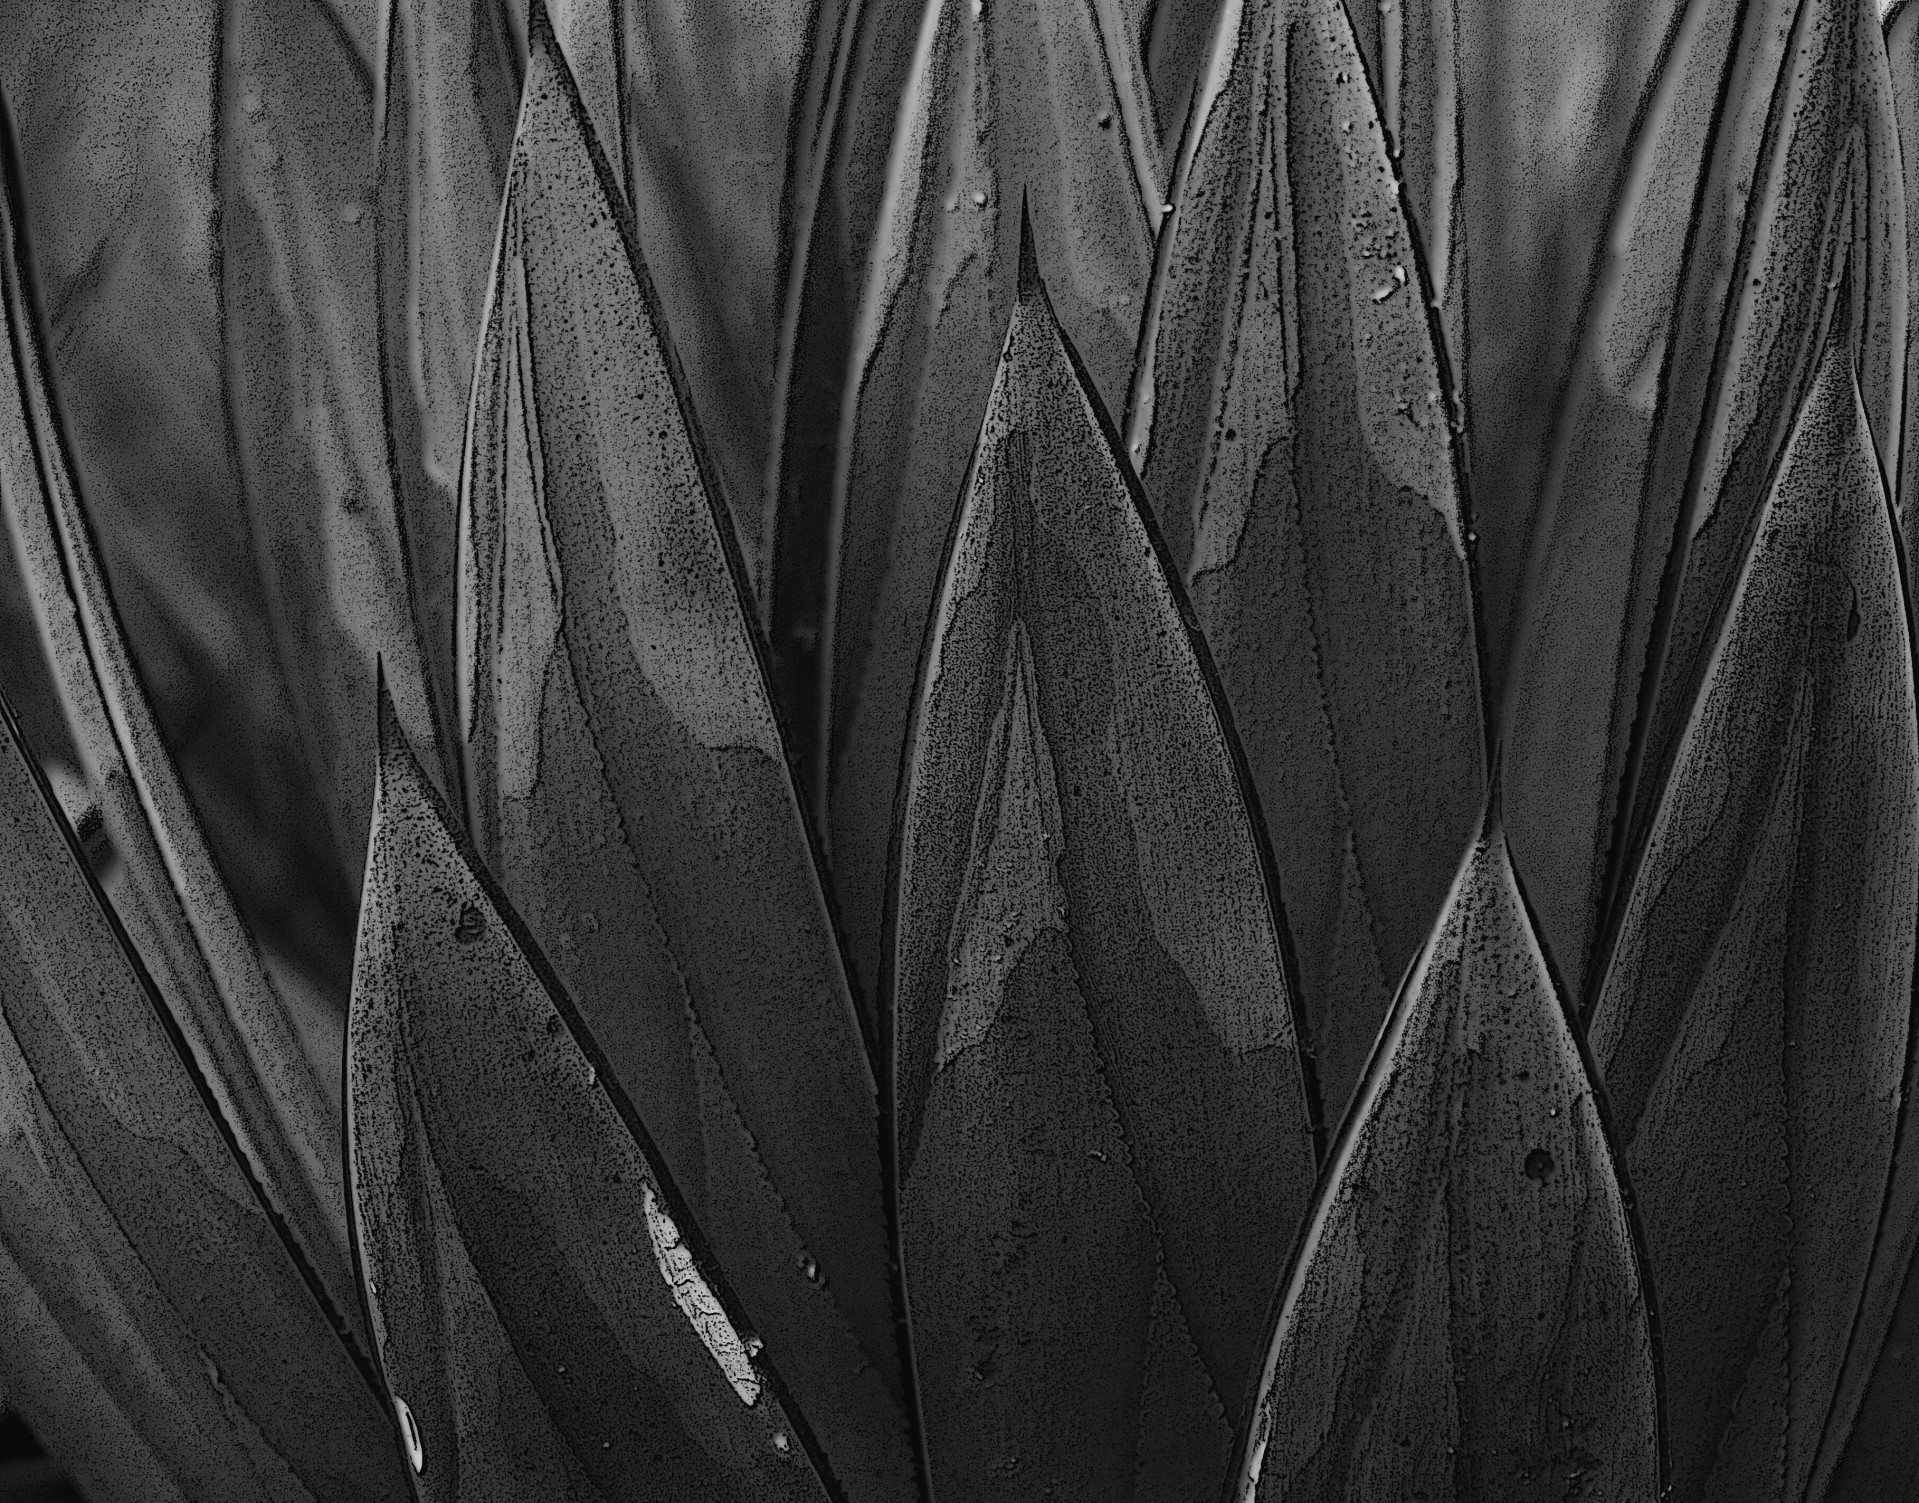 background plant black white free photo